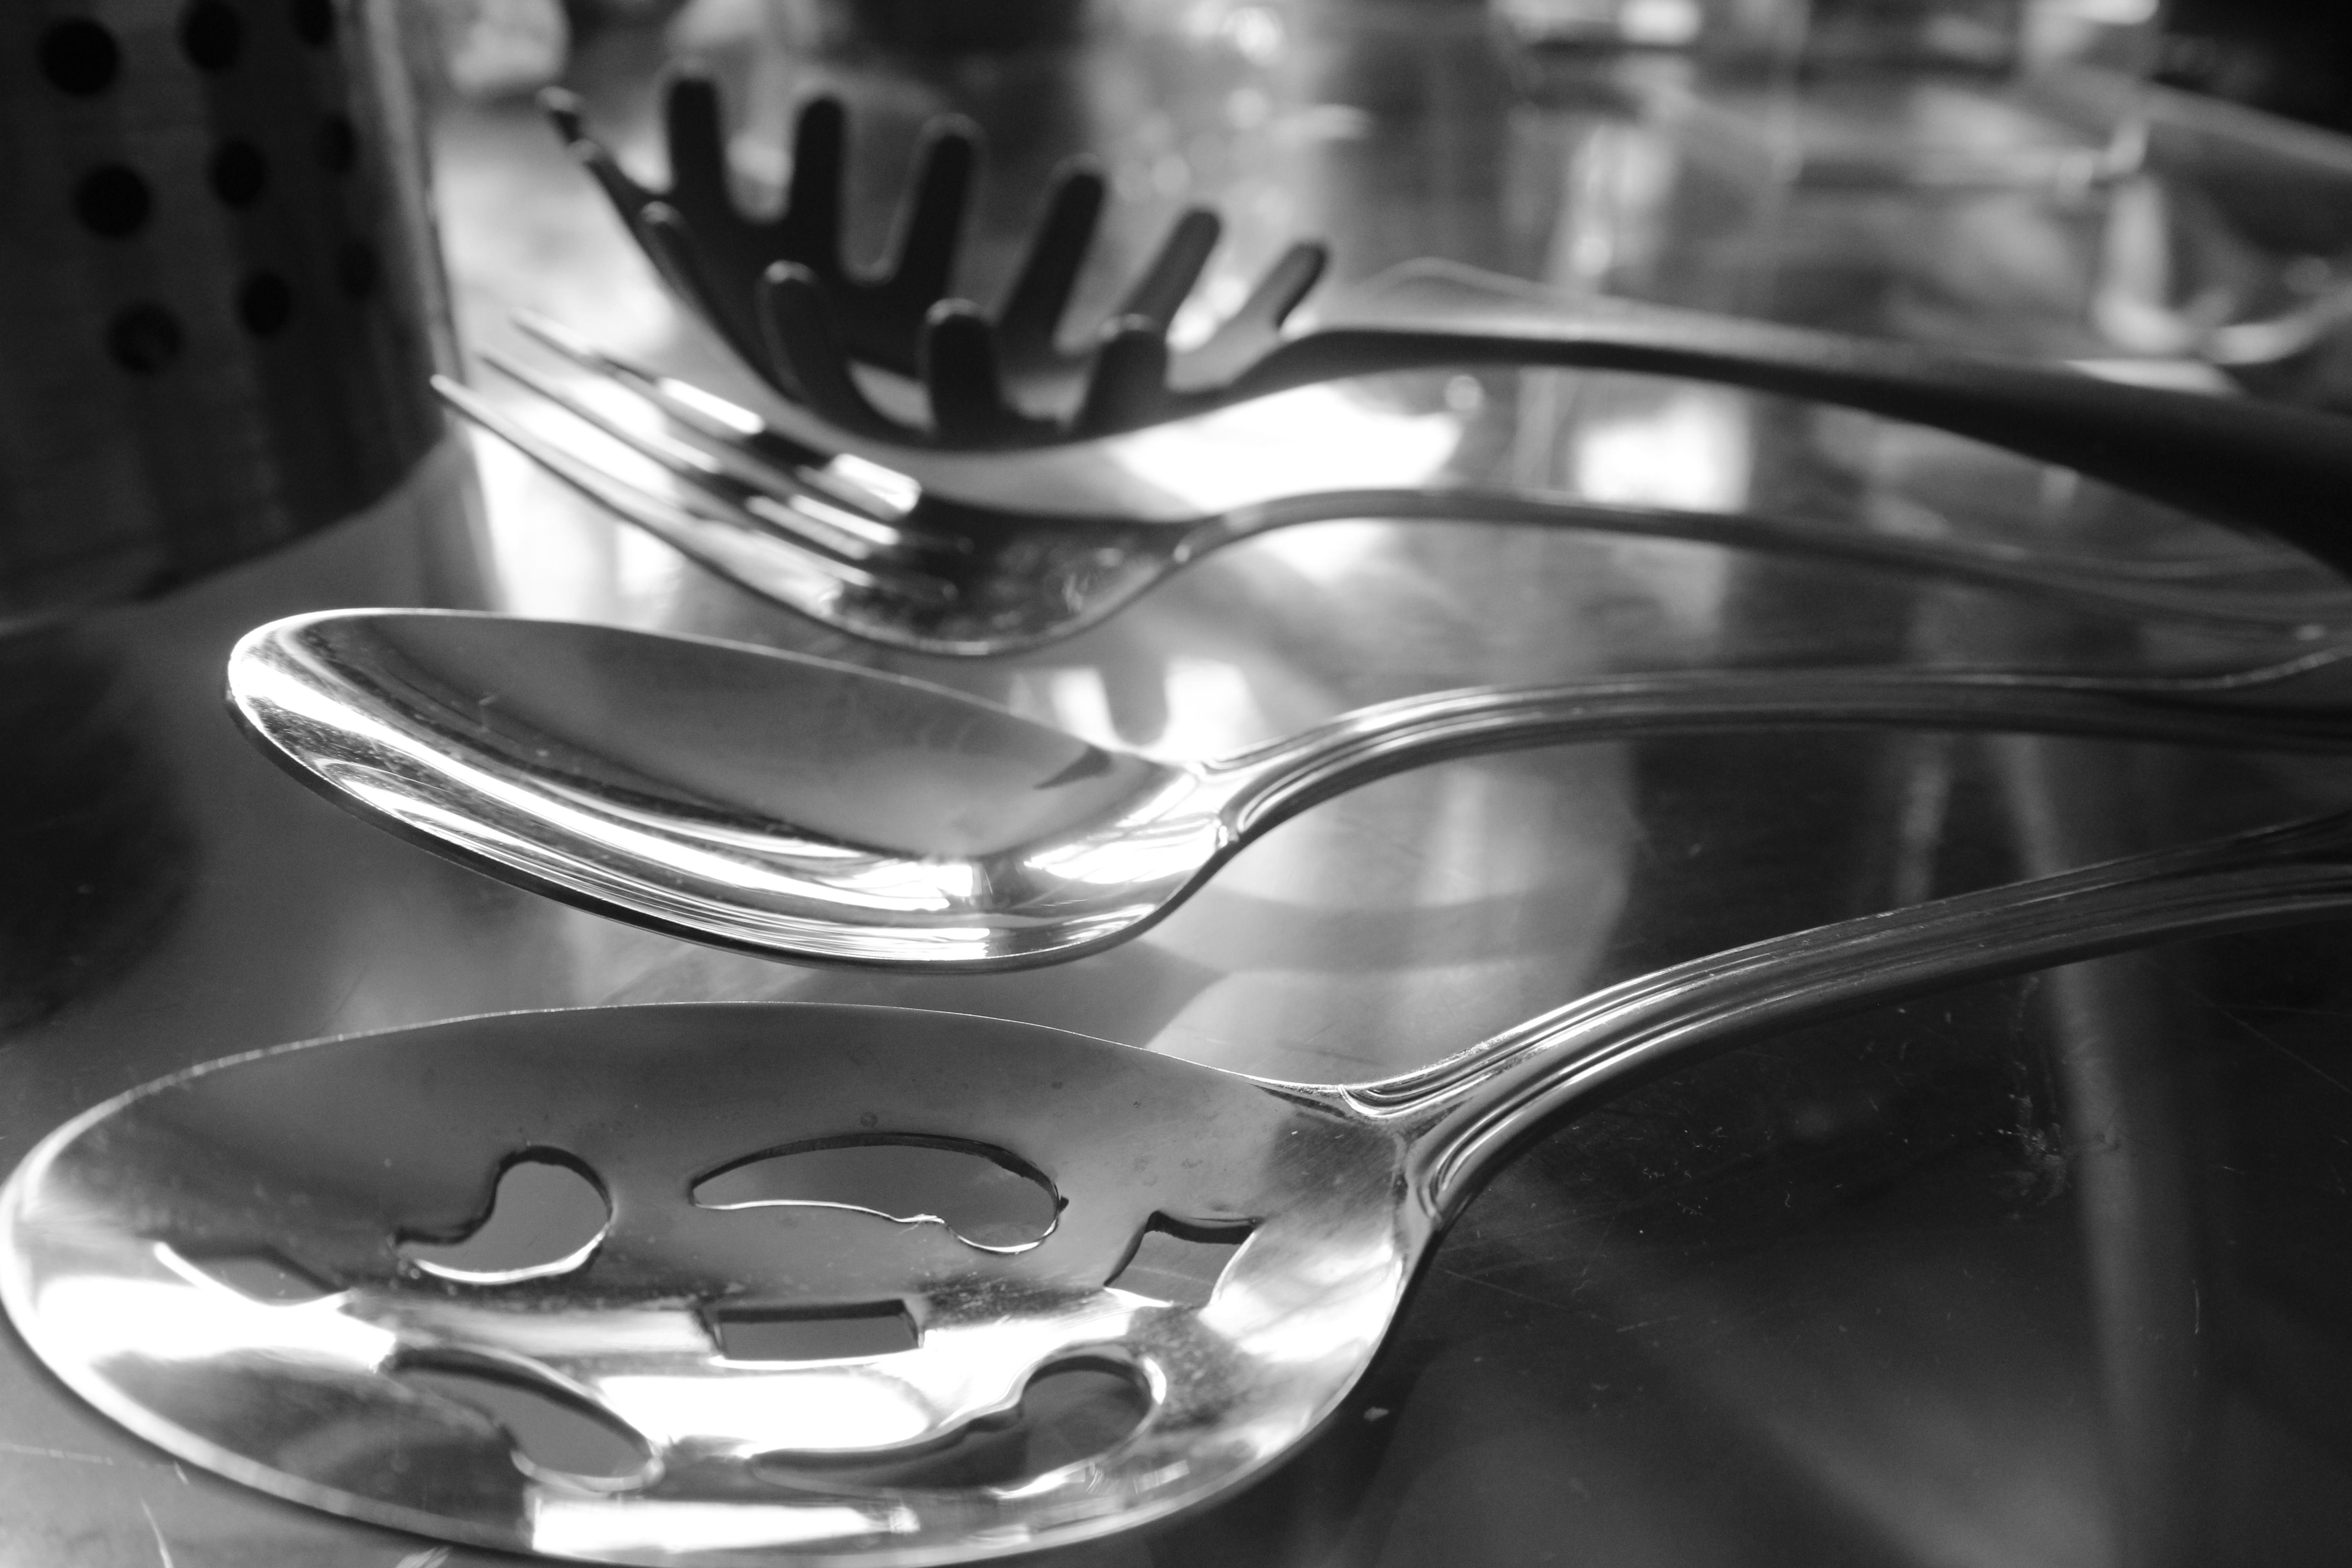 Serving utensils